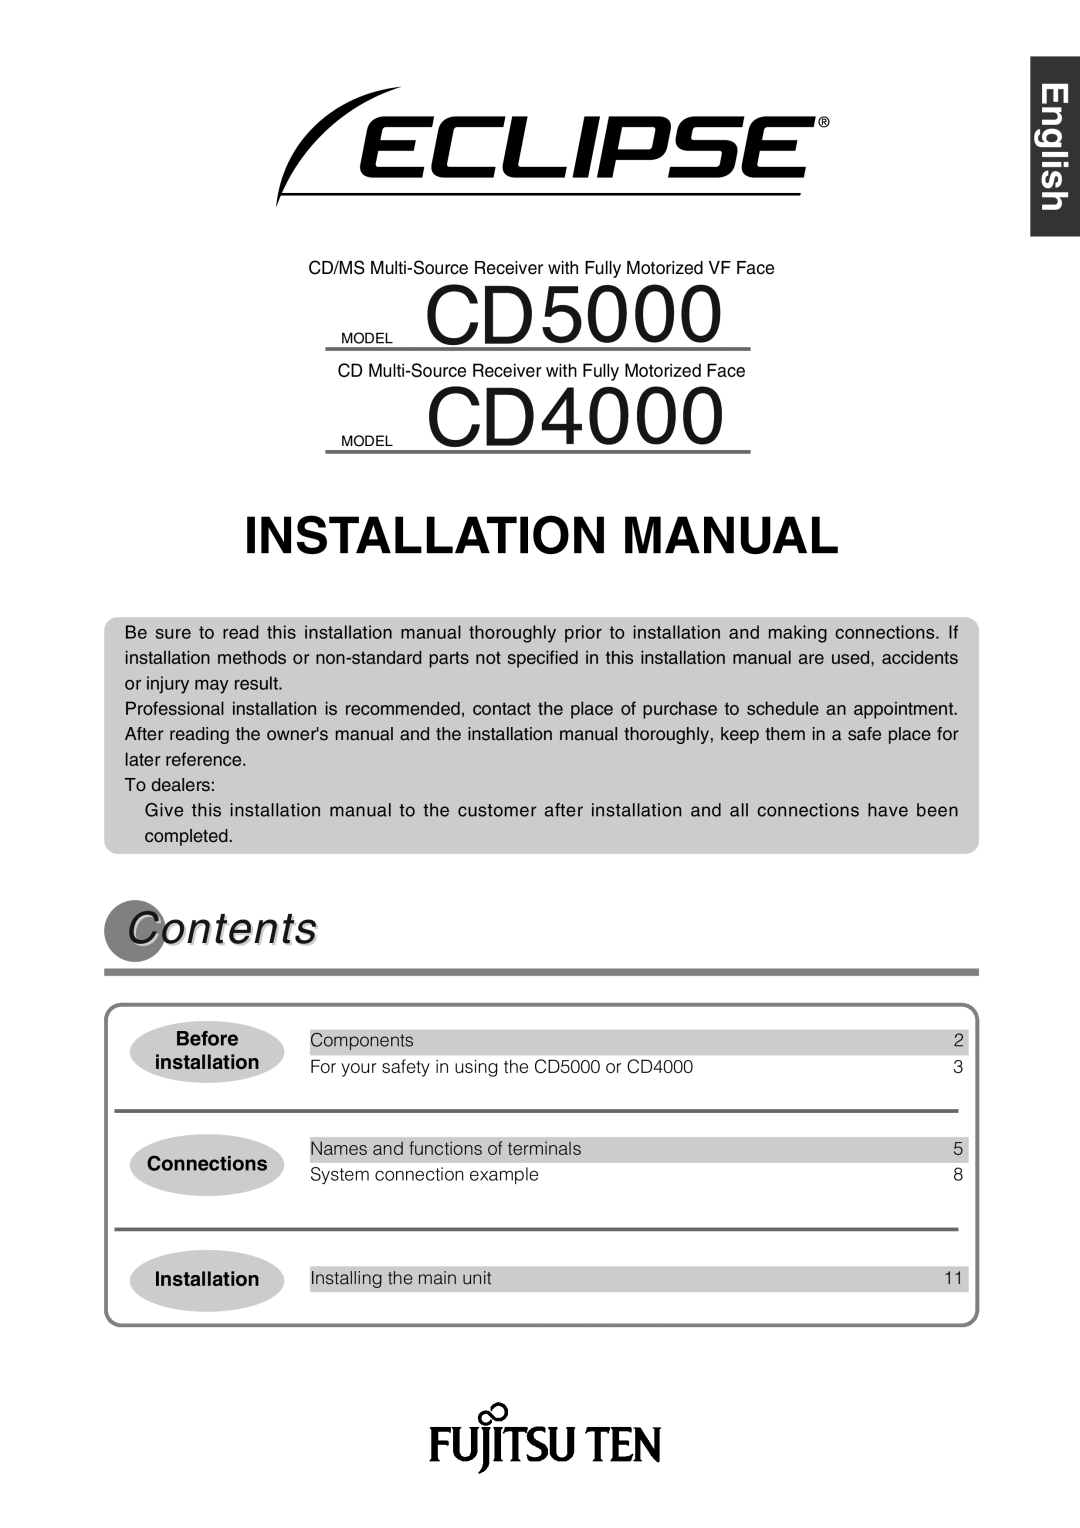 Eclipse - Fujitsu Ten CD4000, CD5000 installation manual Installation Manual, Contents, Svenska, Before, Connections 